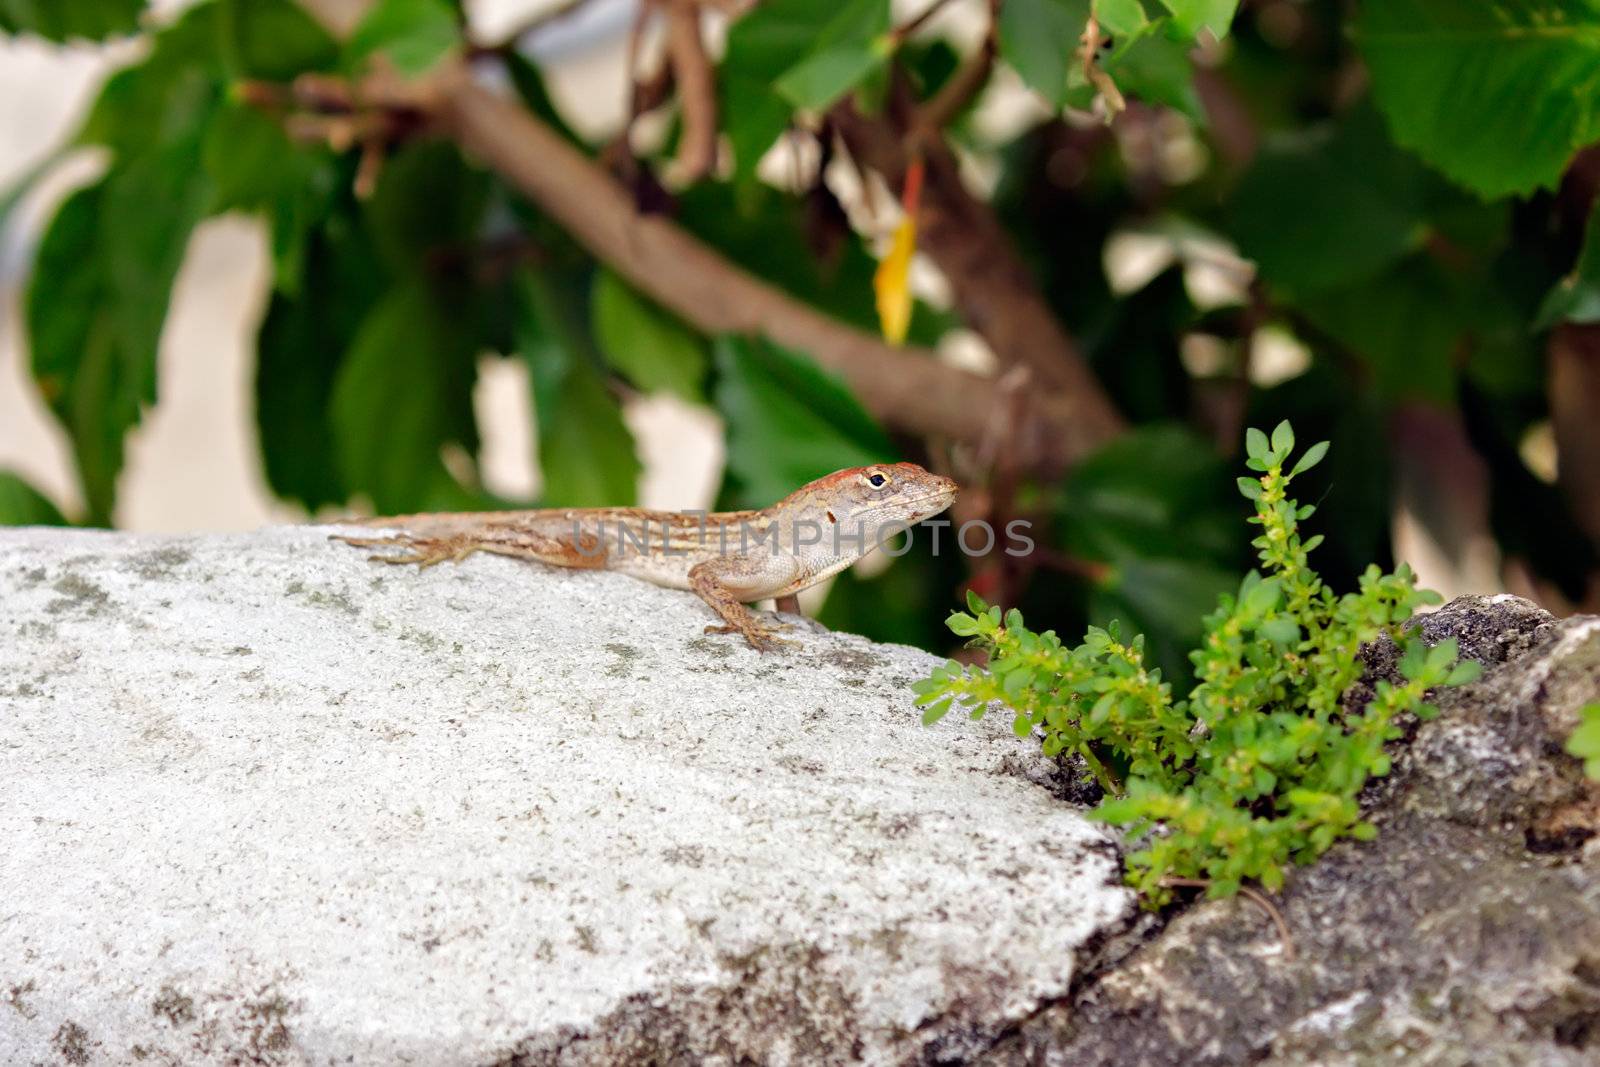 Lizard on a rock in the park